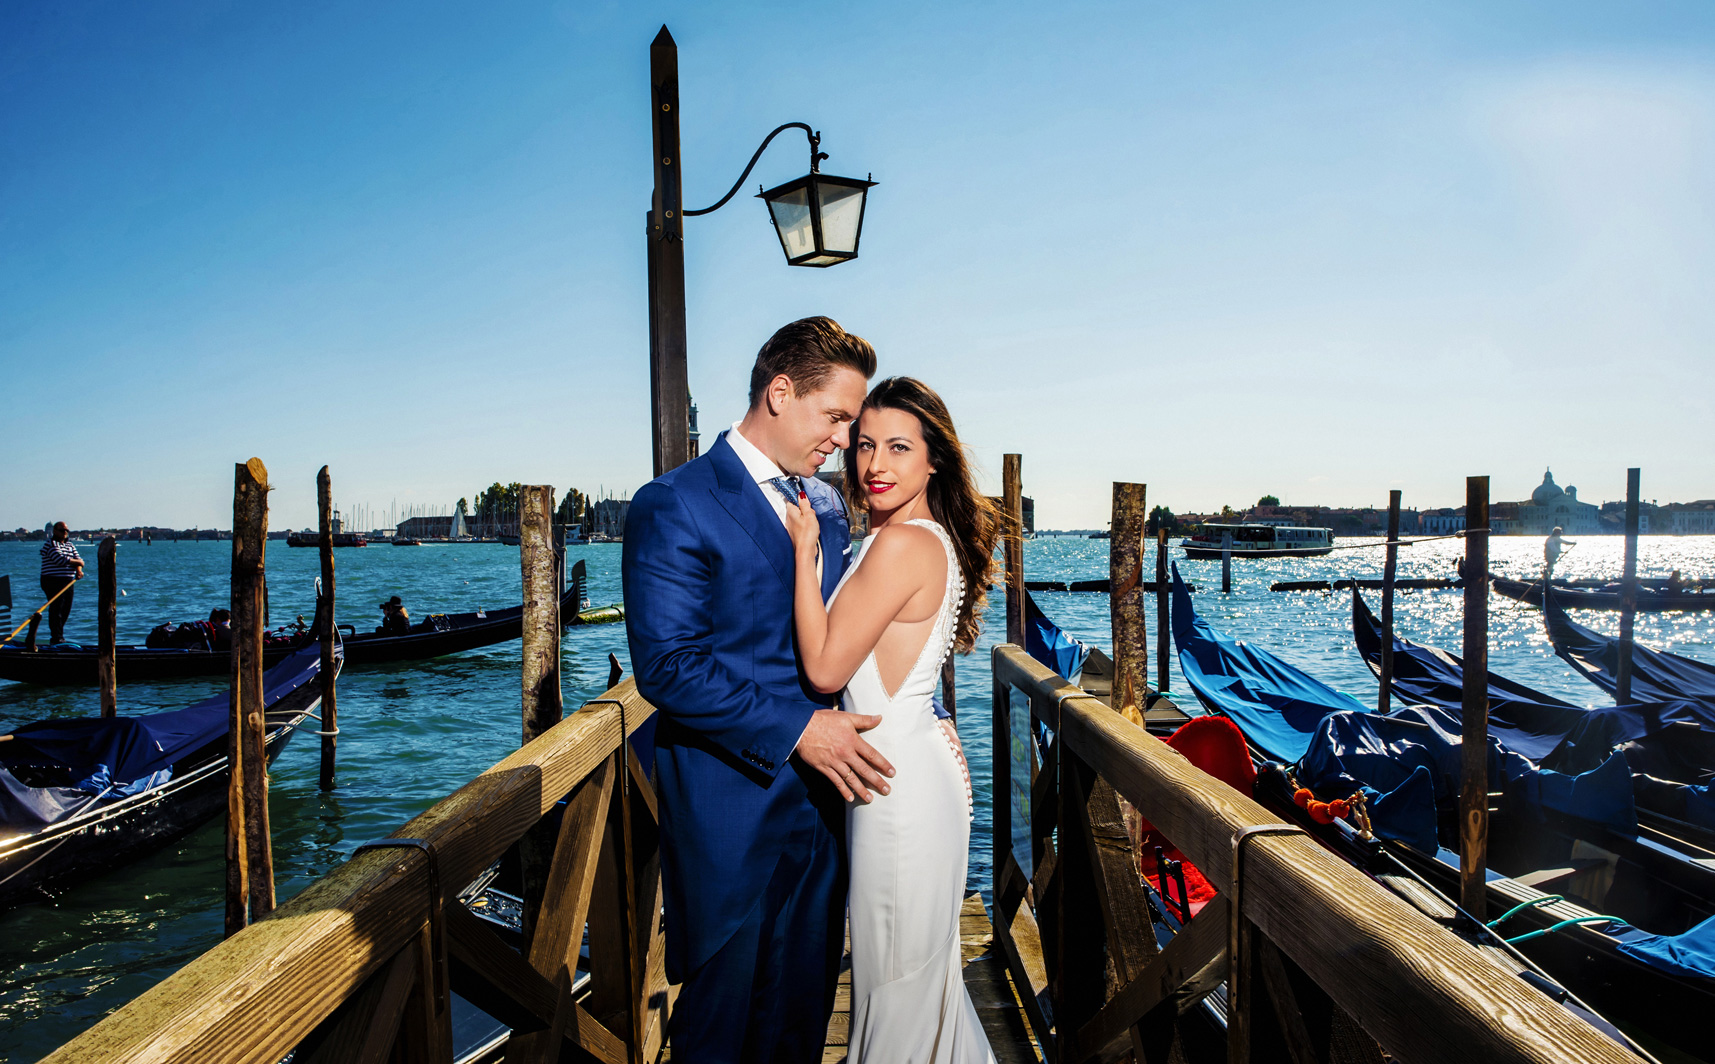 Post boda por Ginés López fotógrafos de boda en Murcía, en los muelles de Venecia.